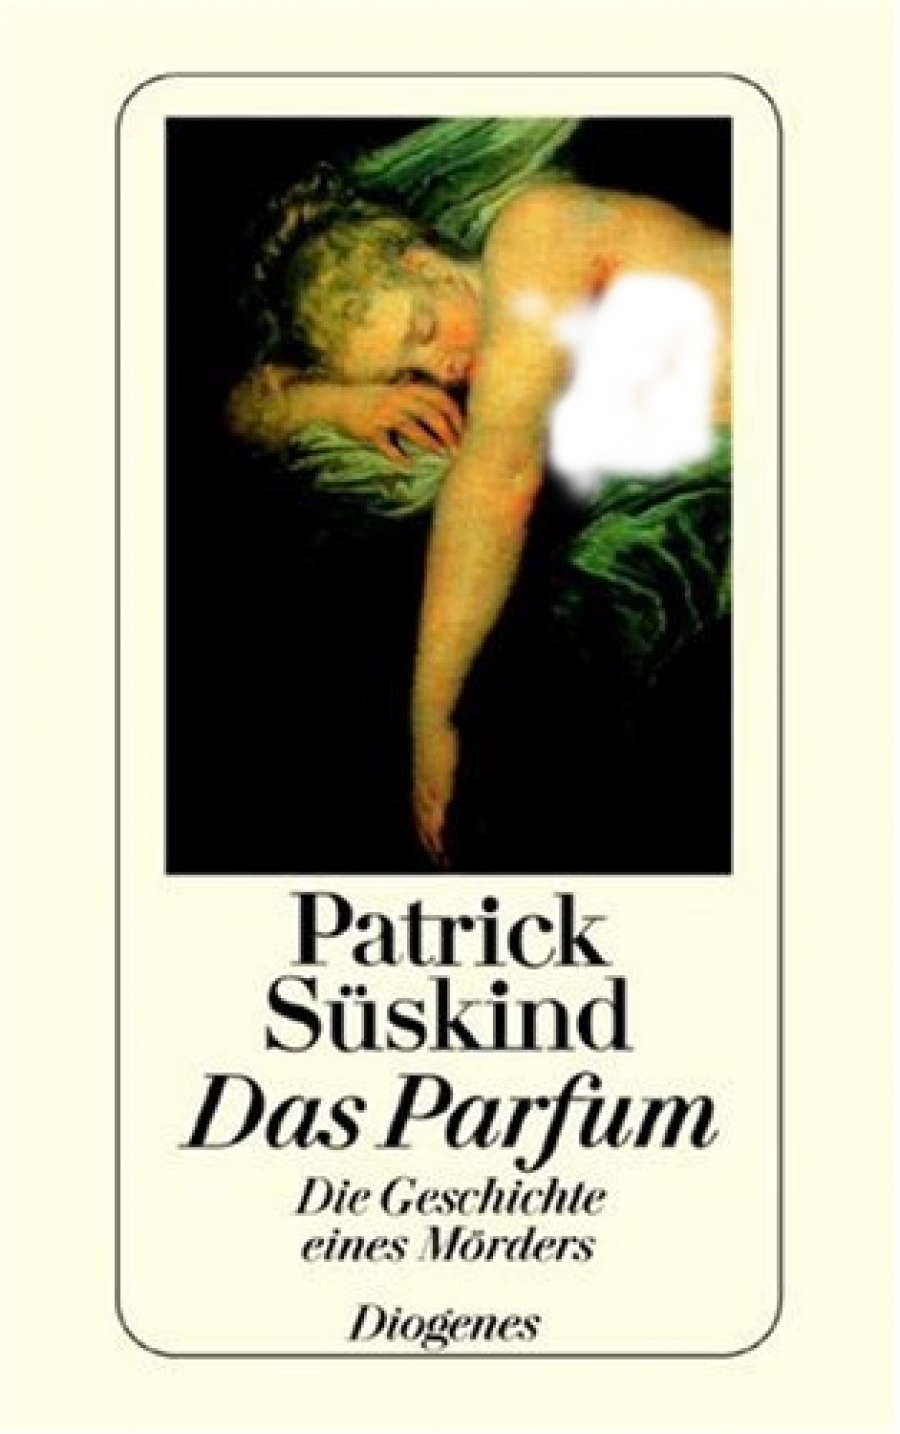 Suskind P. Das Parfuem 